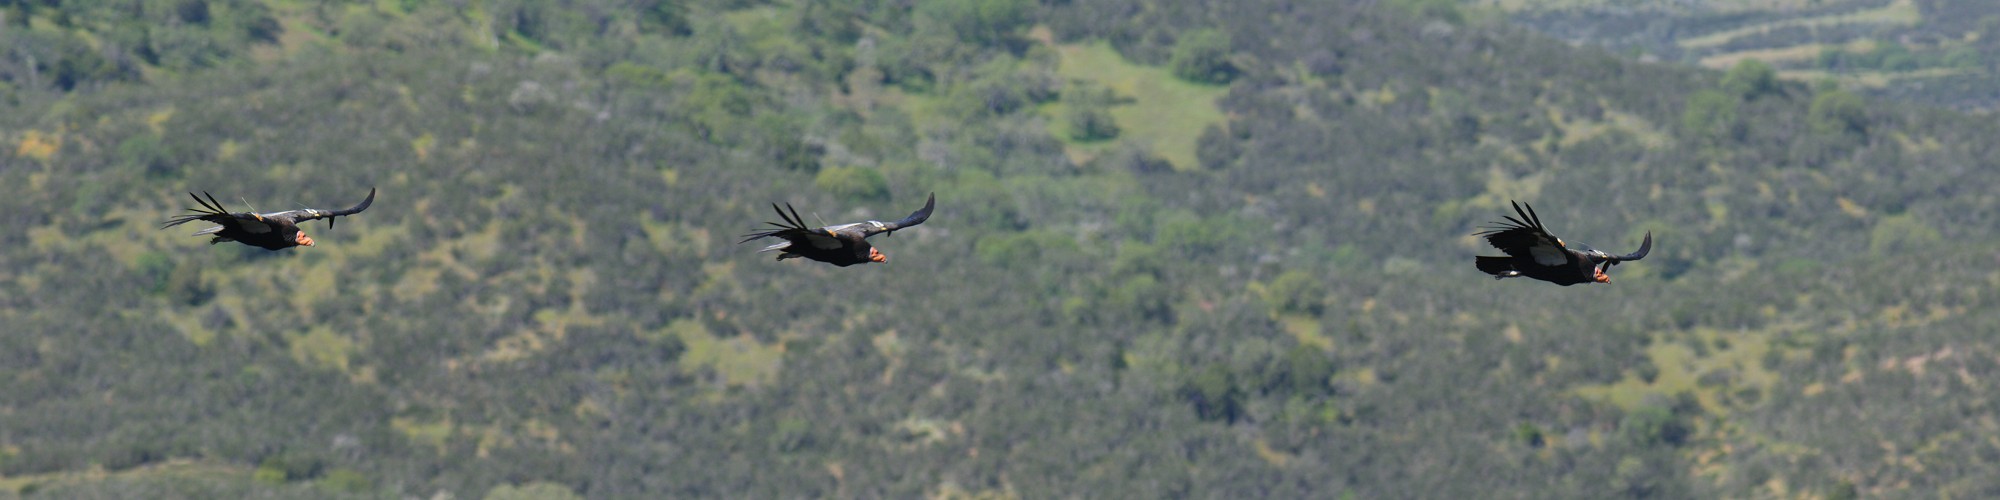 Condor flight sequence